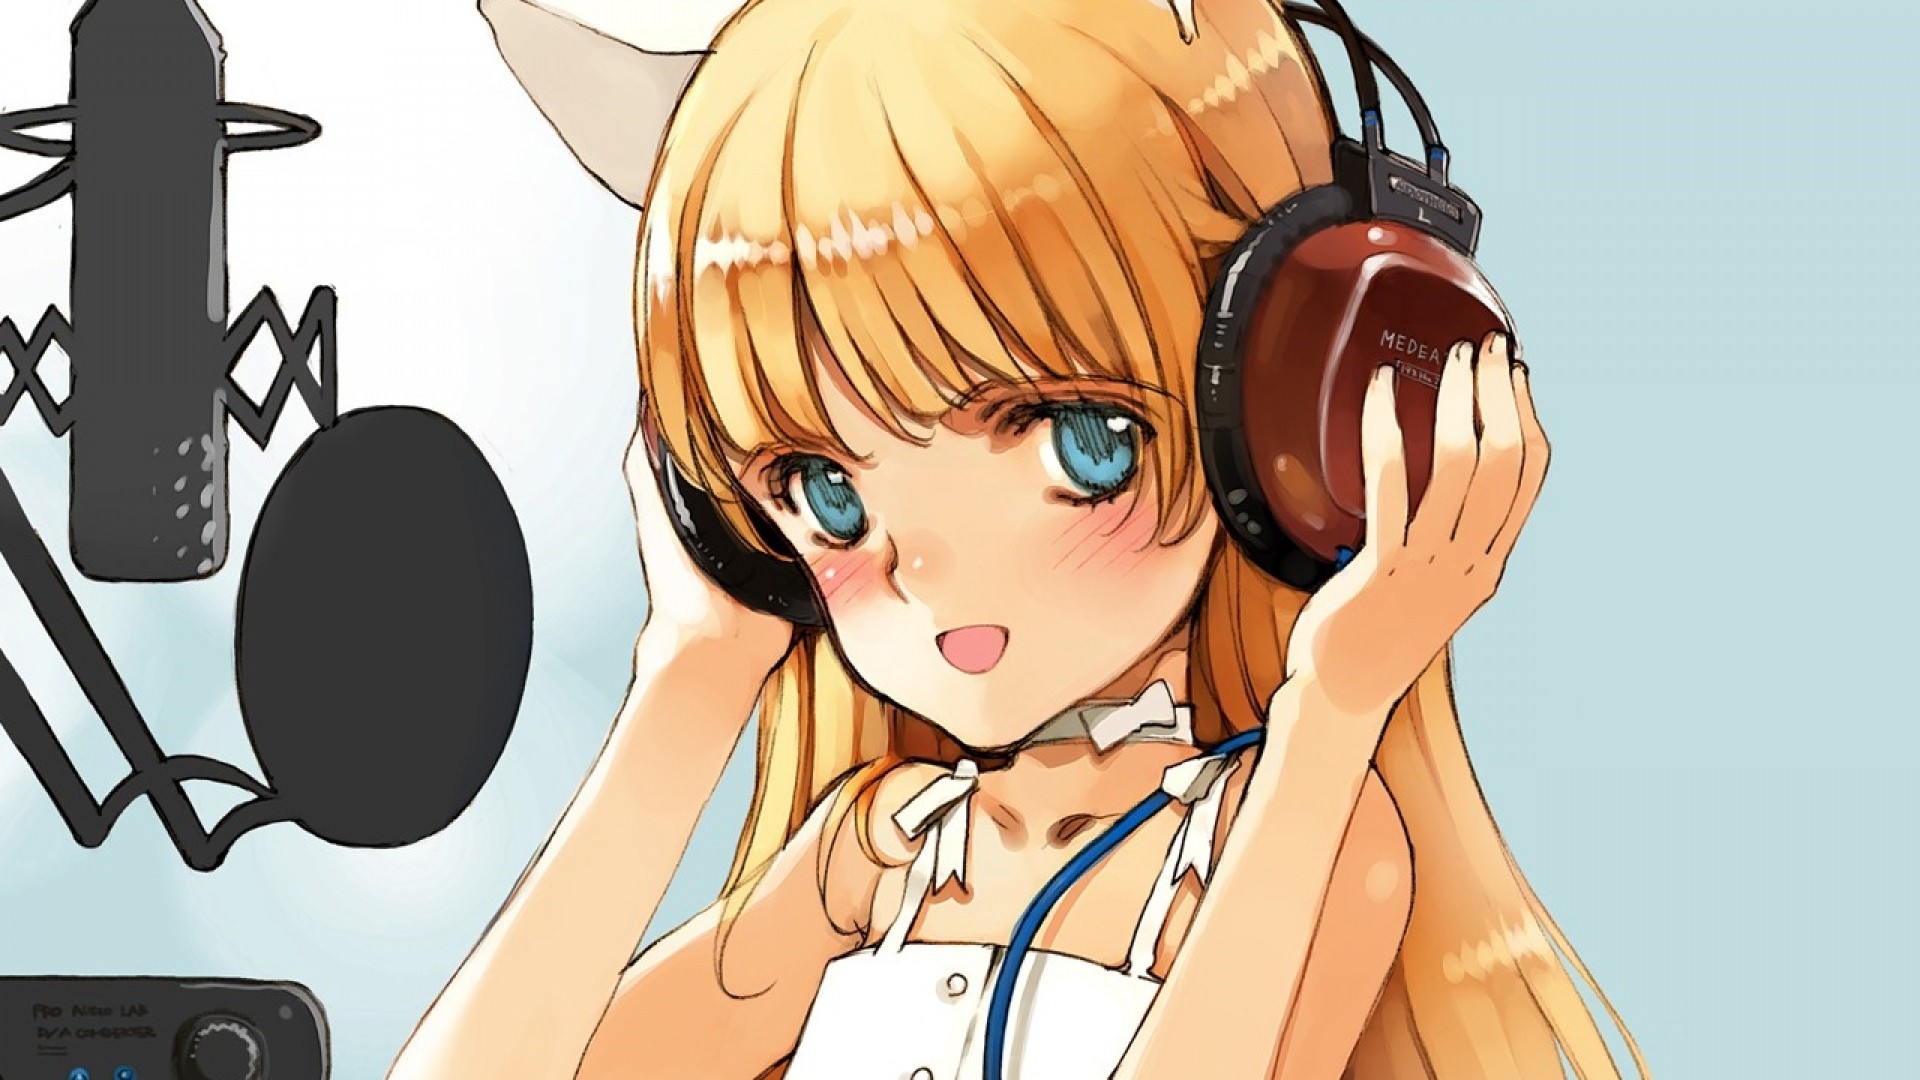 Blonde Anime Girl hd wallpaper download